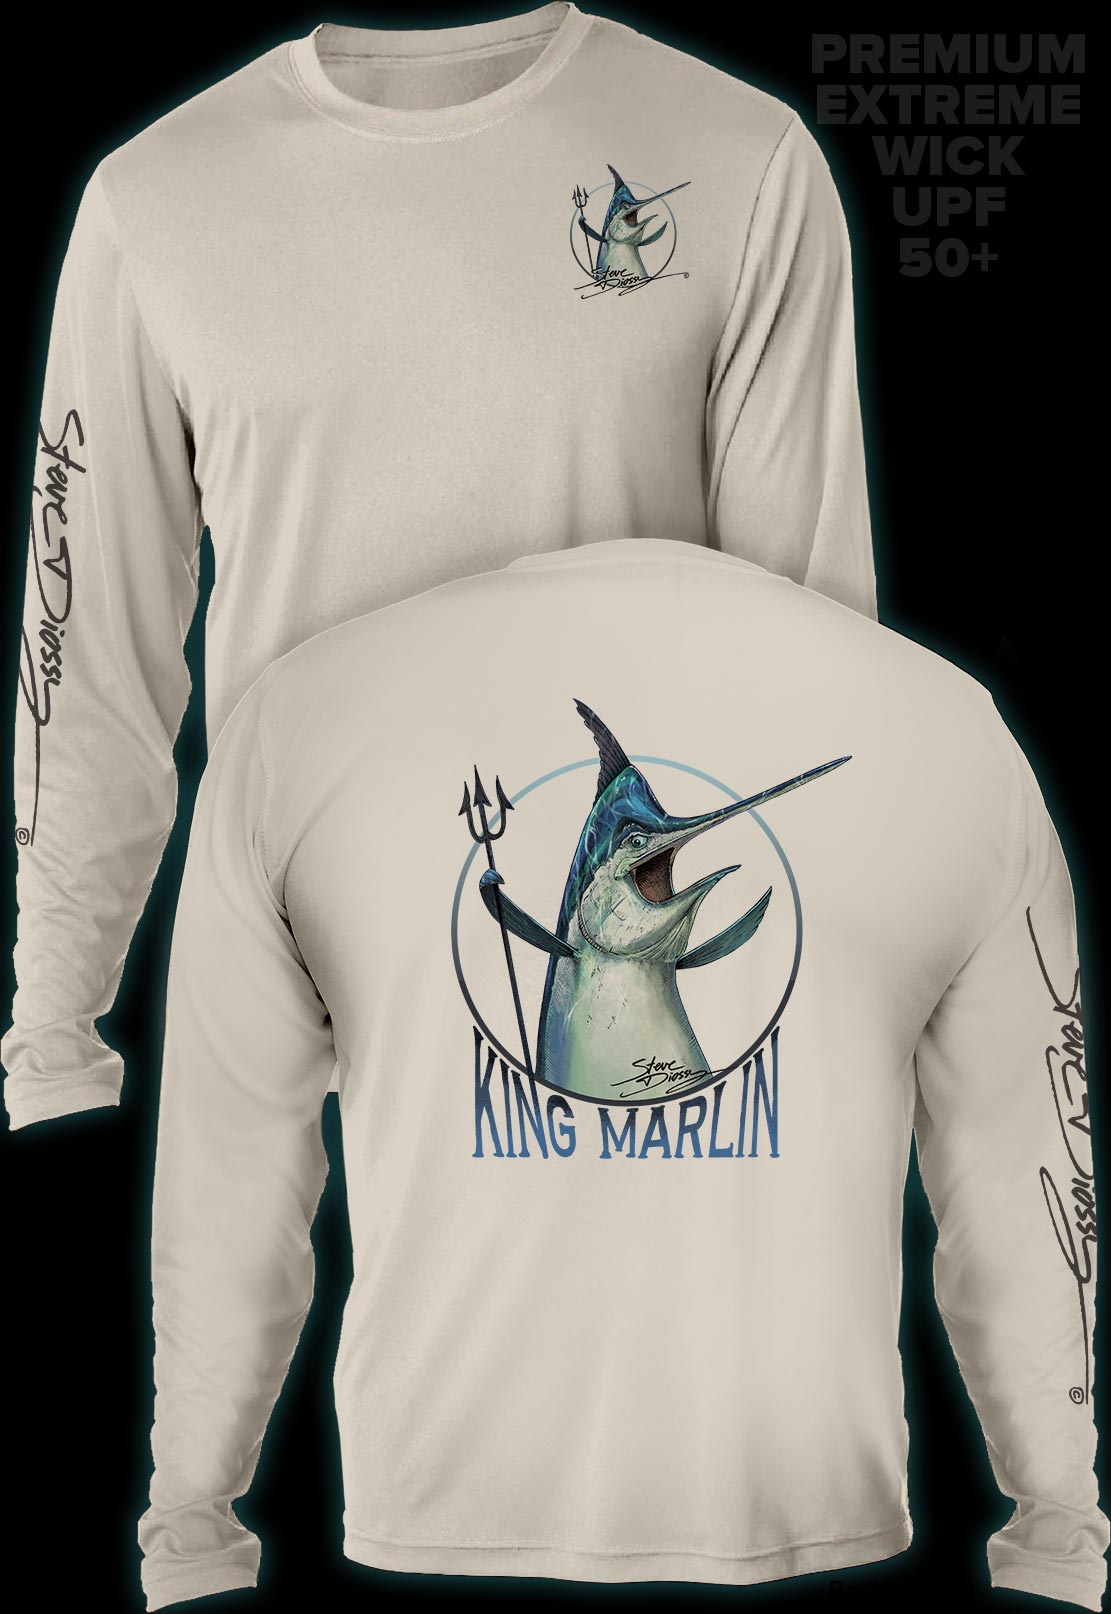 King Marlin Men's Extreme Wick Long Sleeve Performance Shirt ᴜᴘꜰ-ᴛᴇᴇ